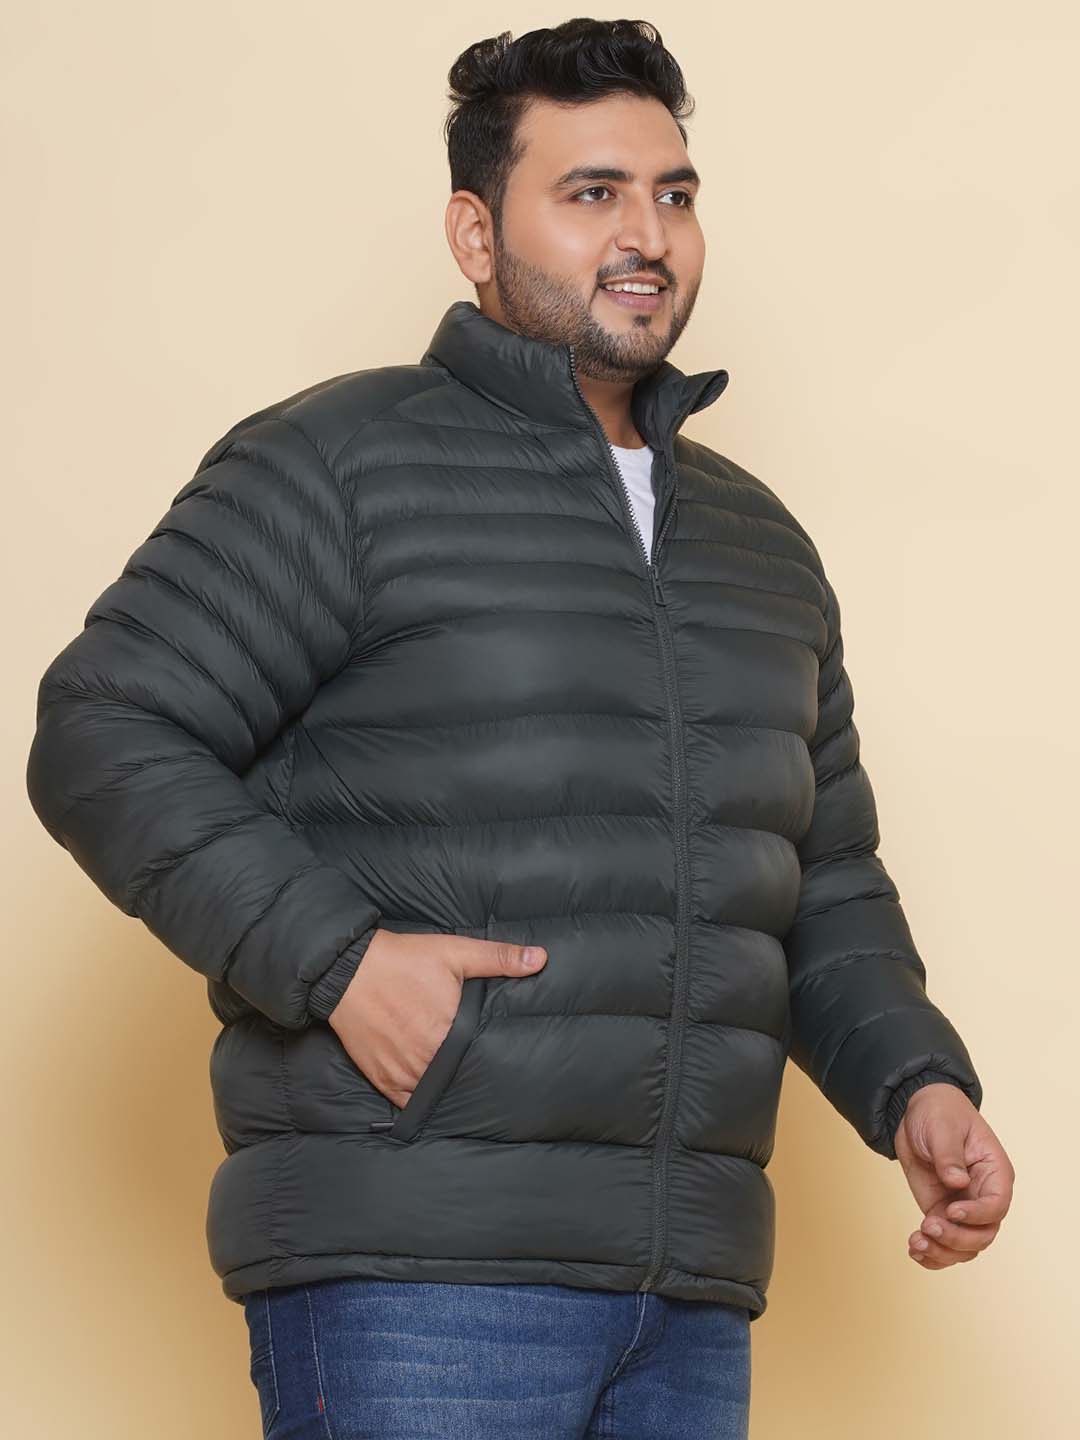 winterwear/jackets/JPJKT73083B/jpjkt73083b-3.jpg